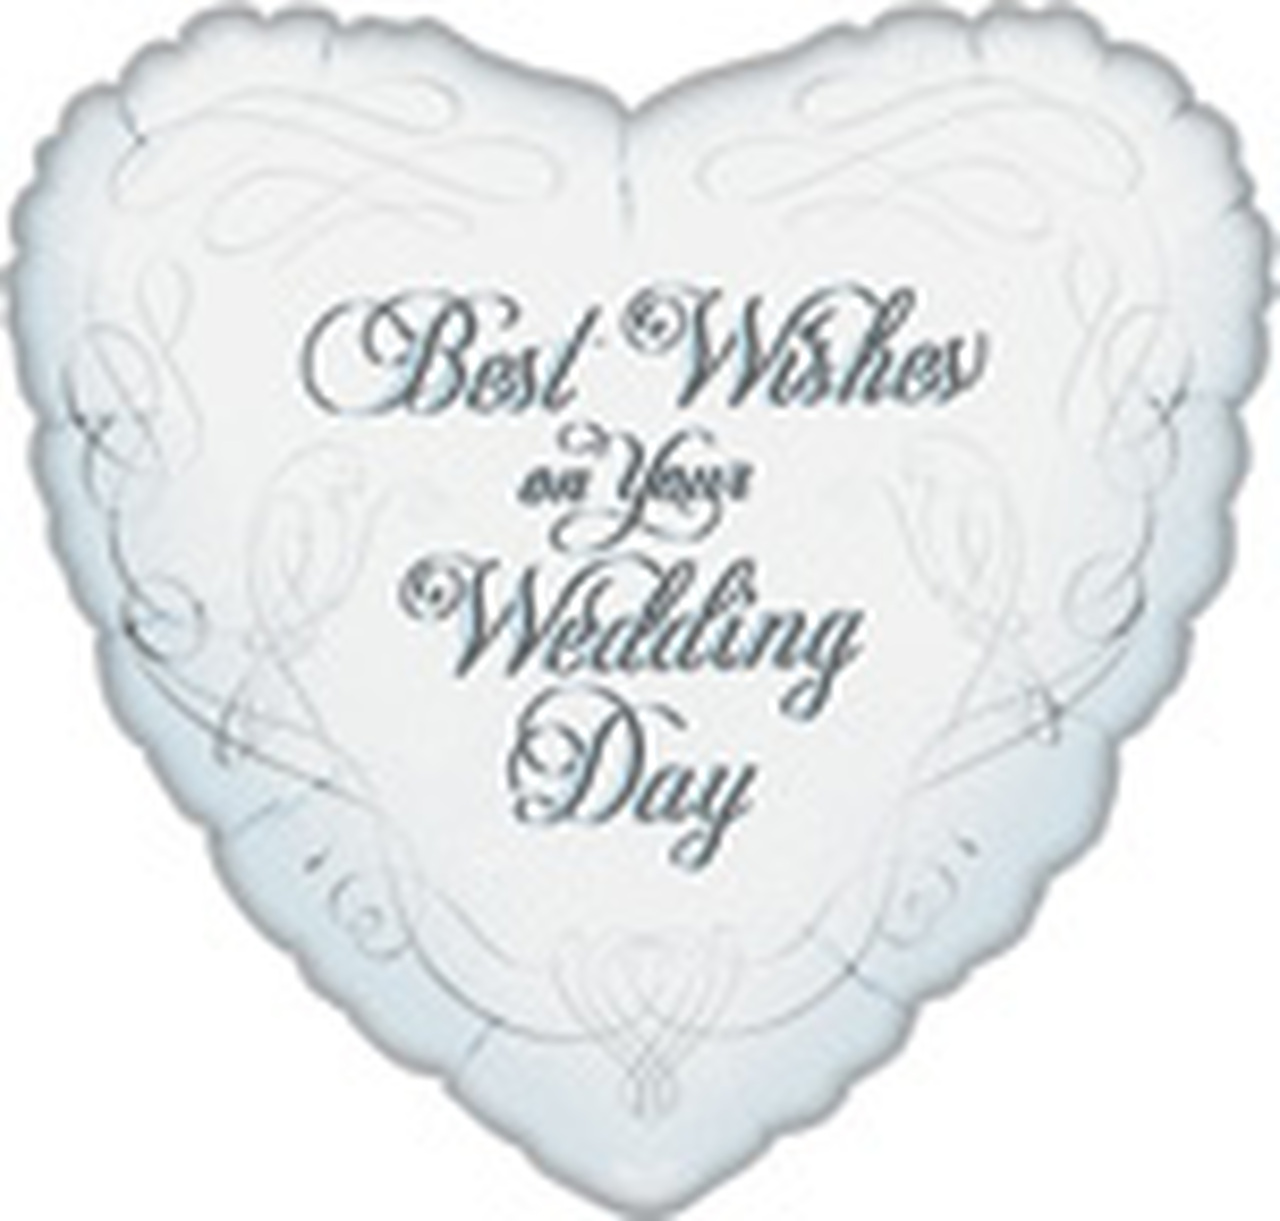 ” Best wishes on your wedding day” Mylar